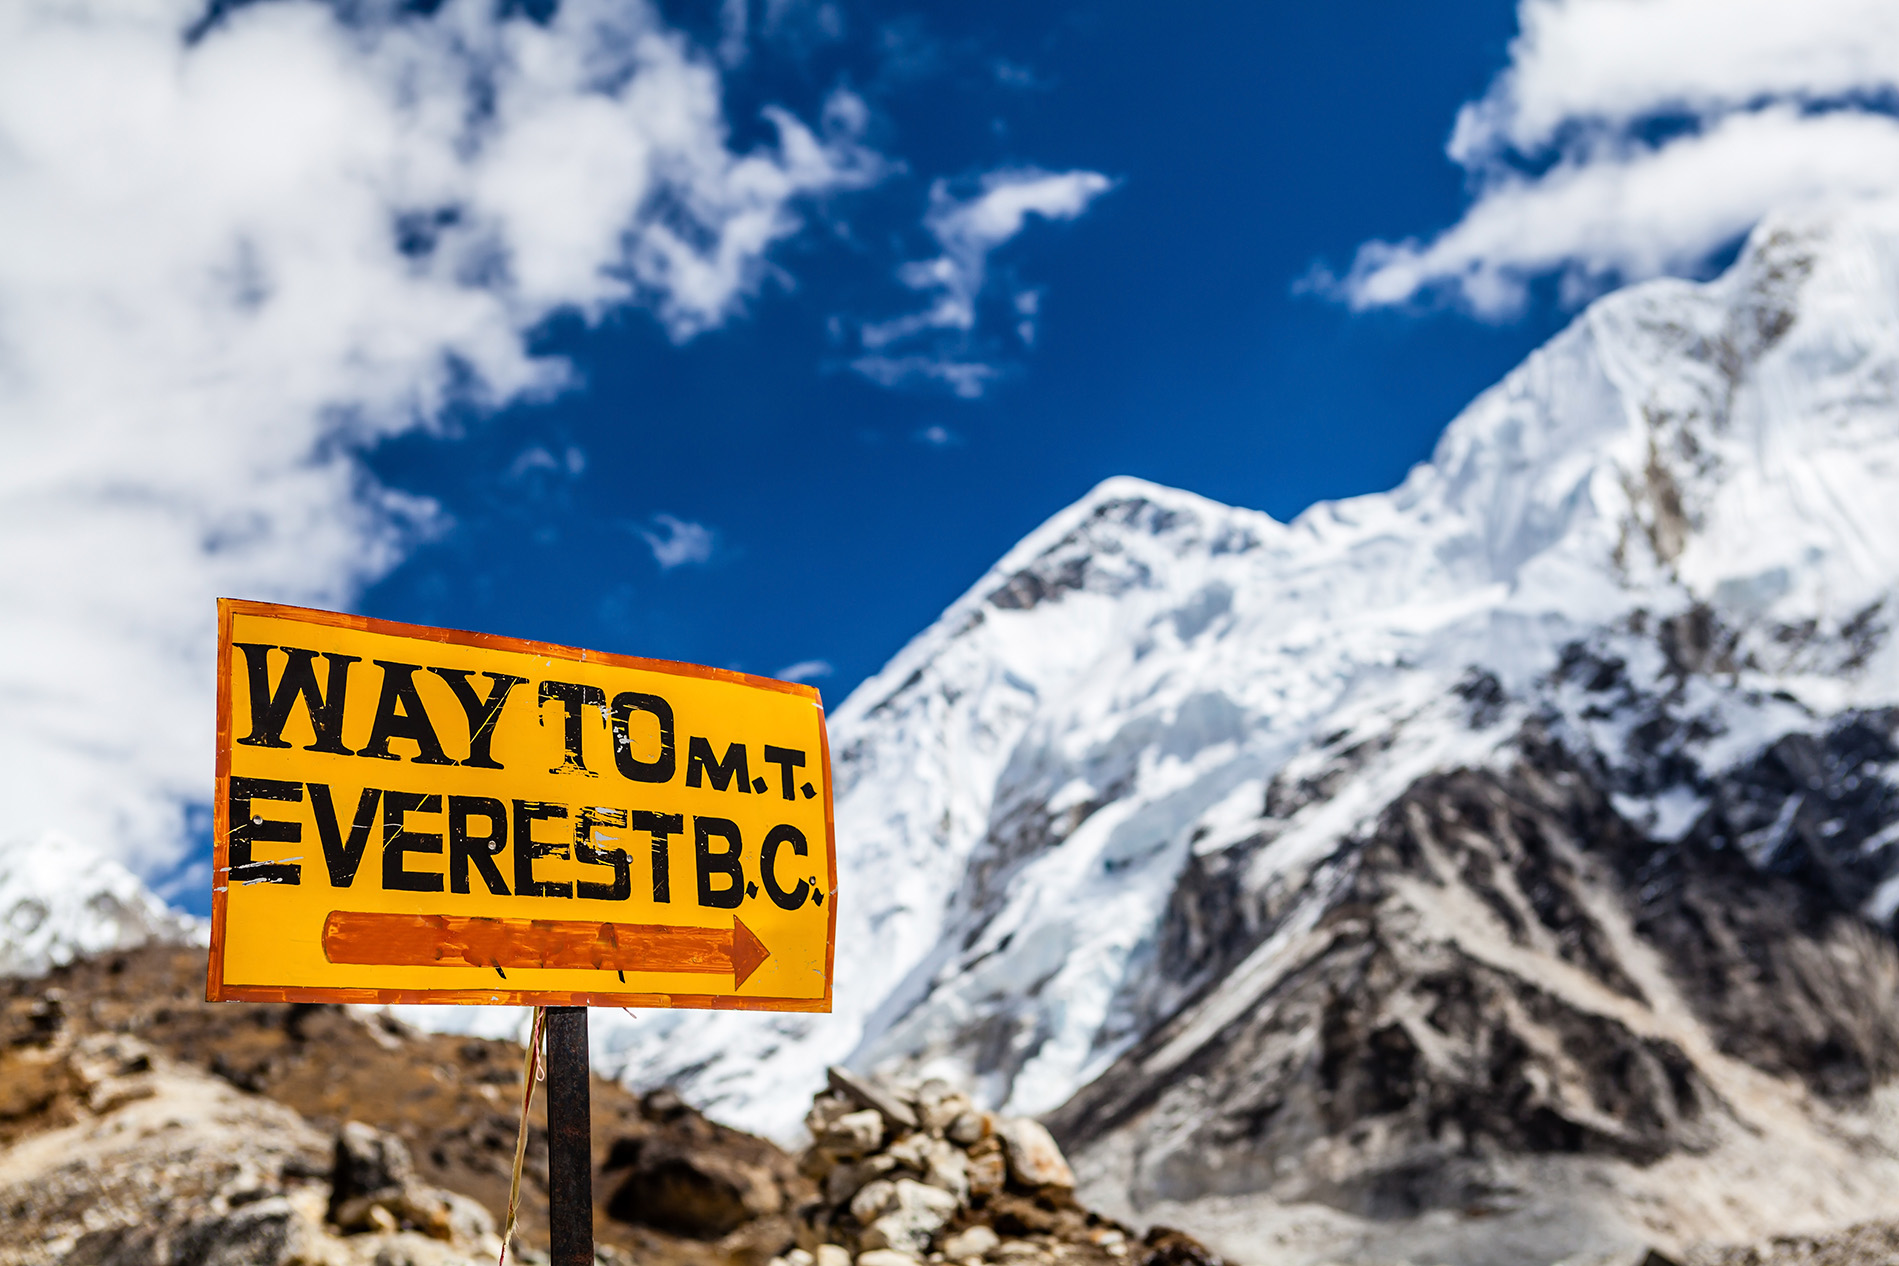 Räätälöity Everest Base Camp -vaellus